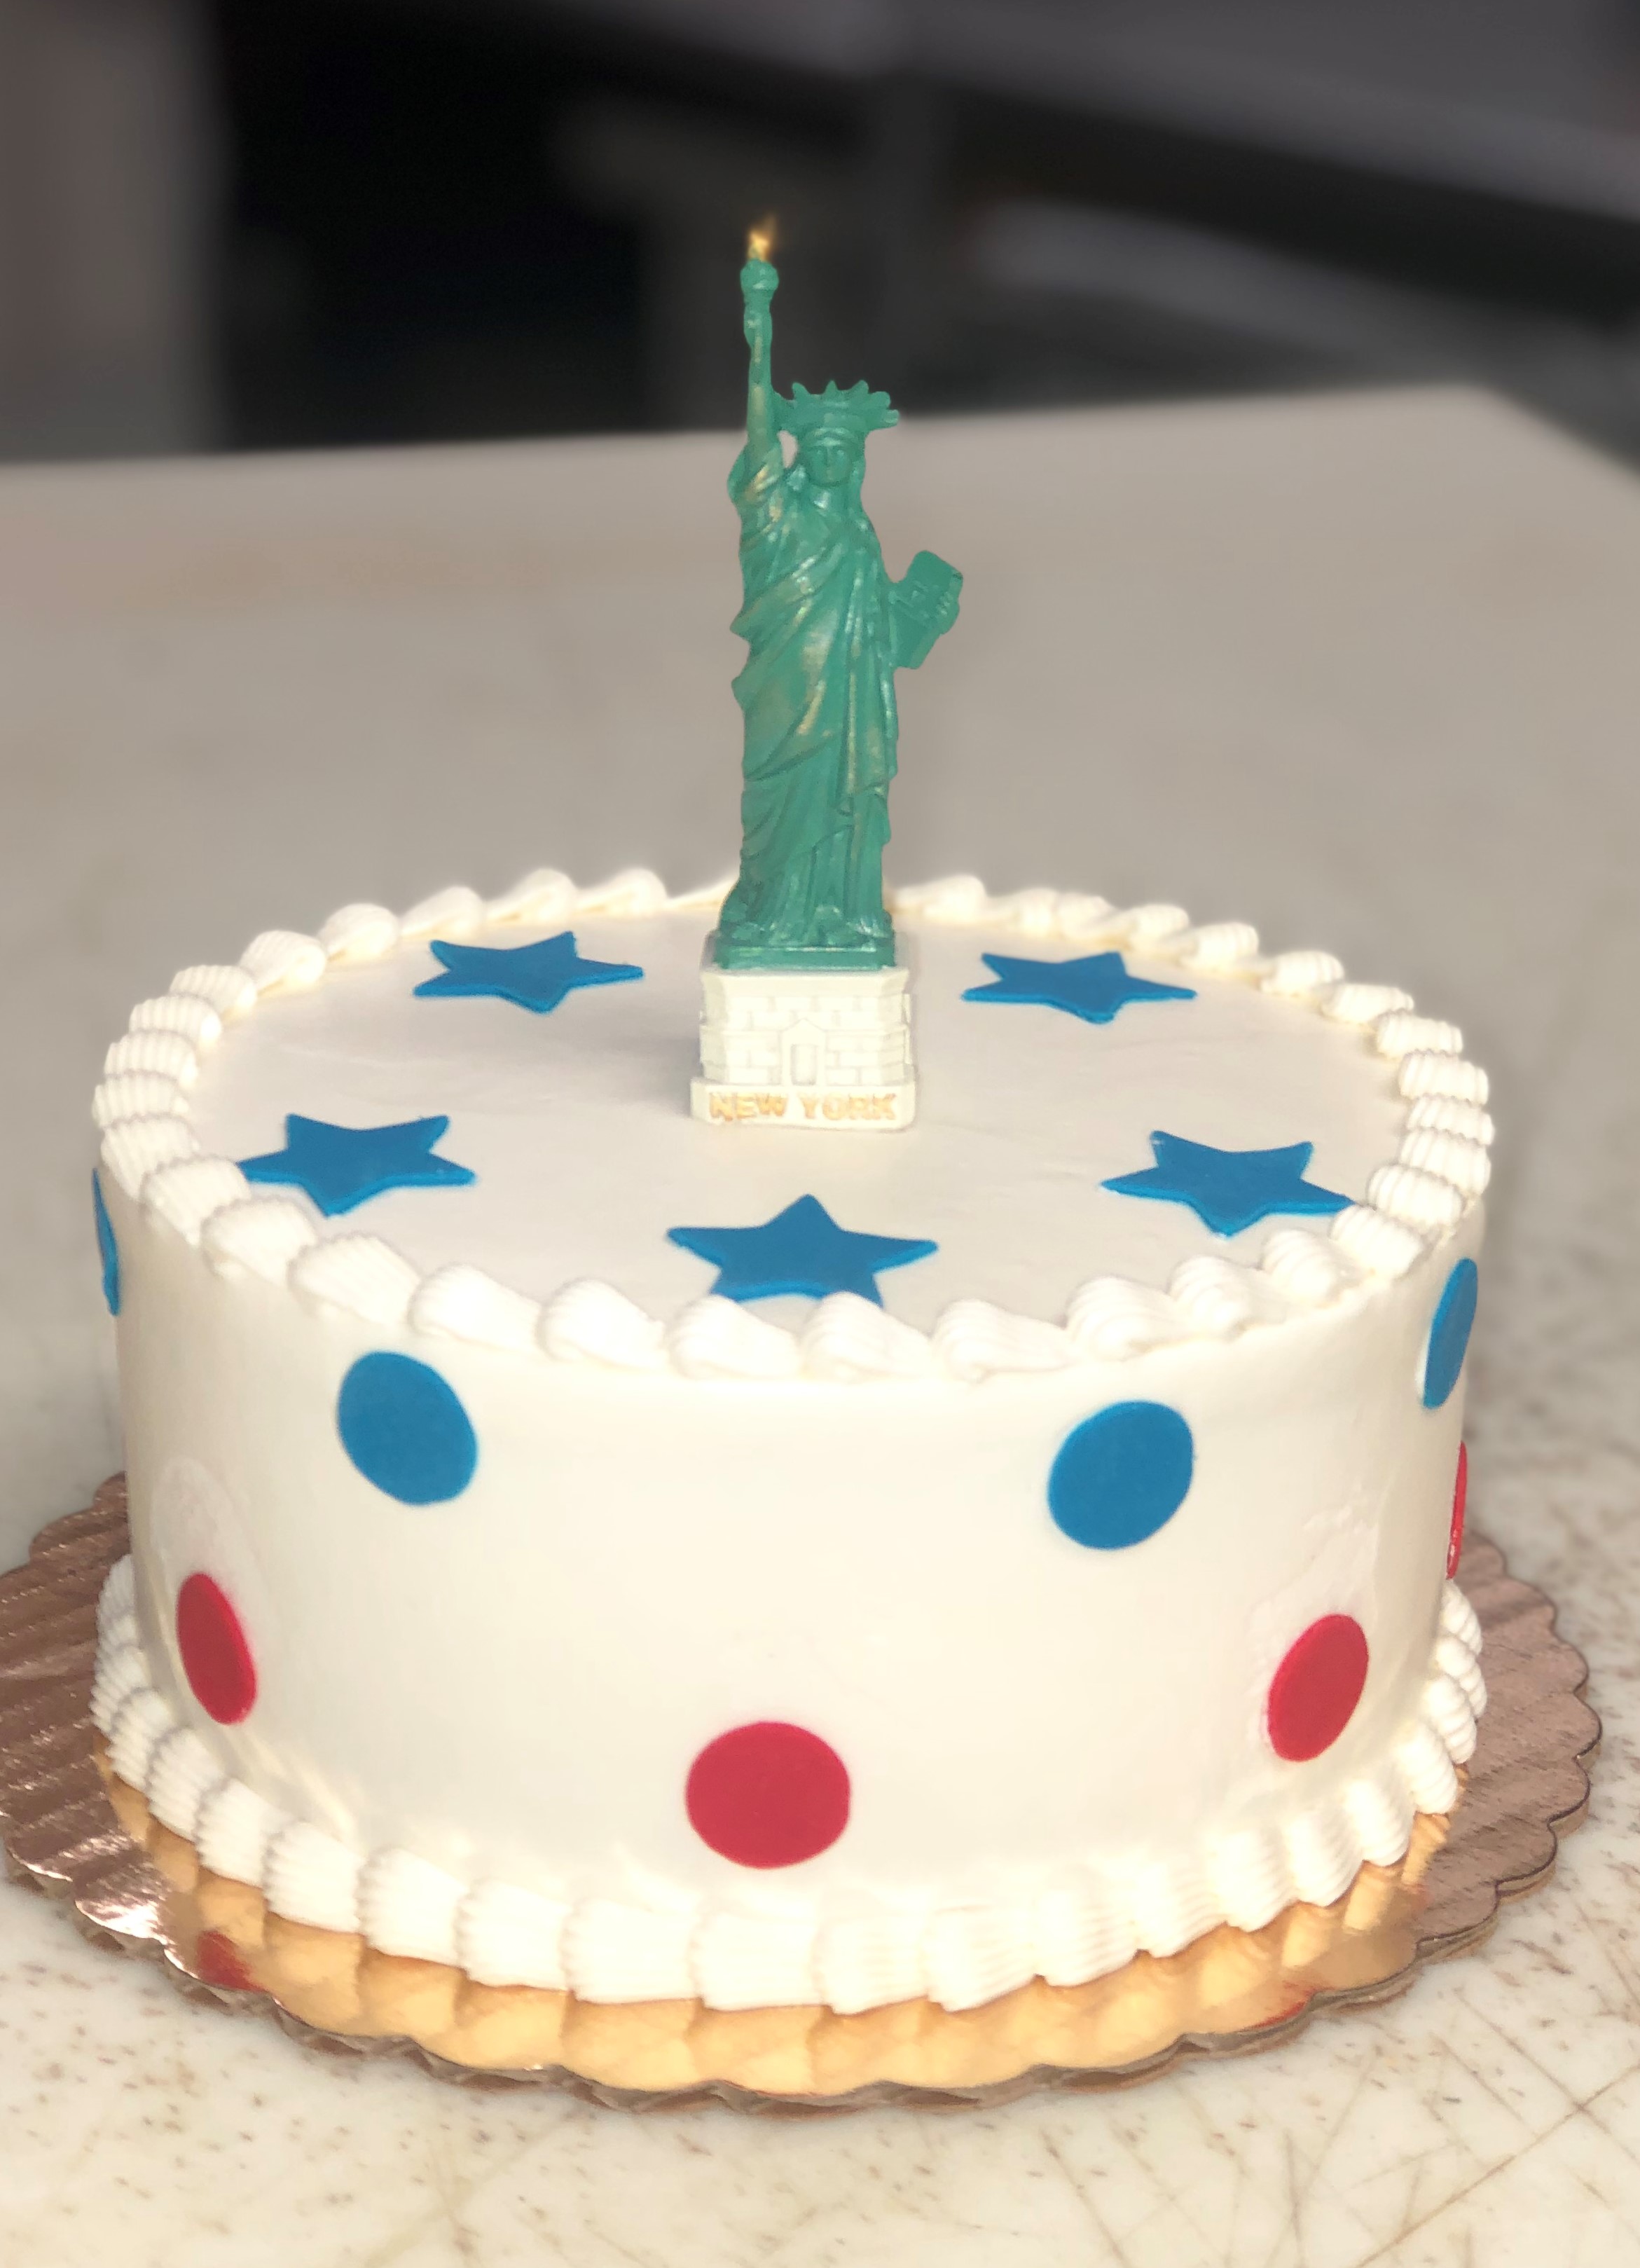 Vintage Statue of Liberty cake | Premium Photo Illustration - rawpixel